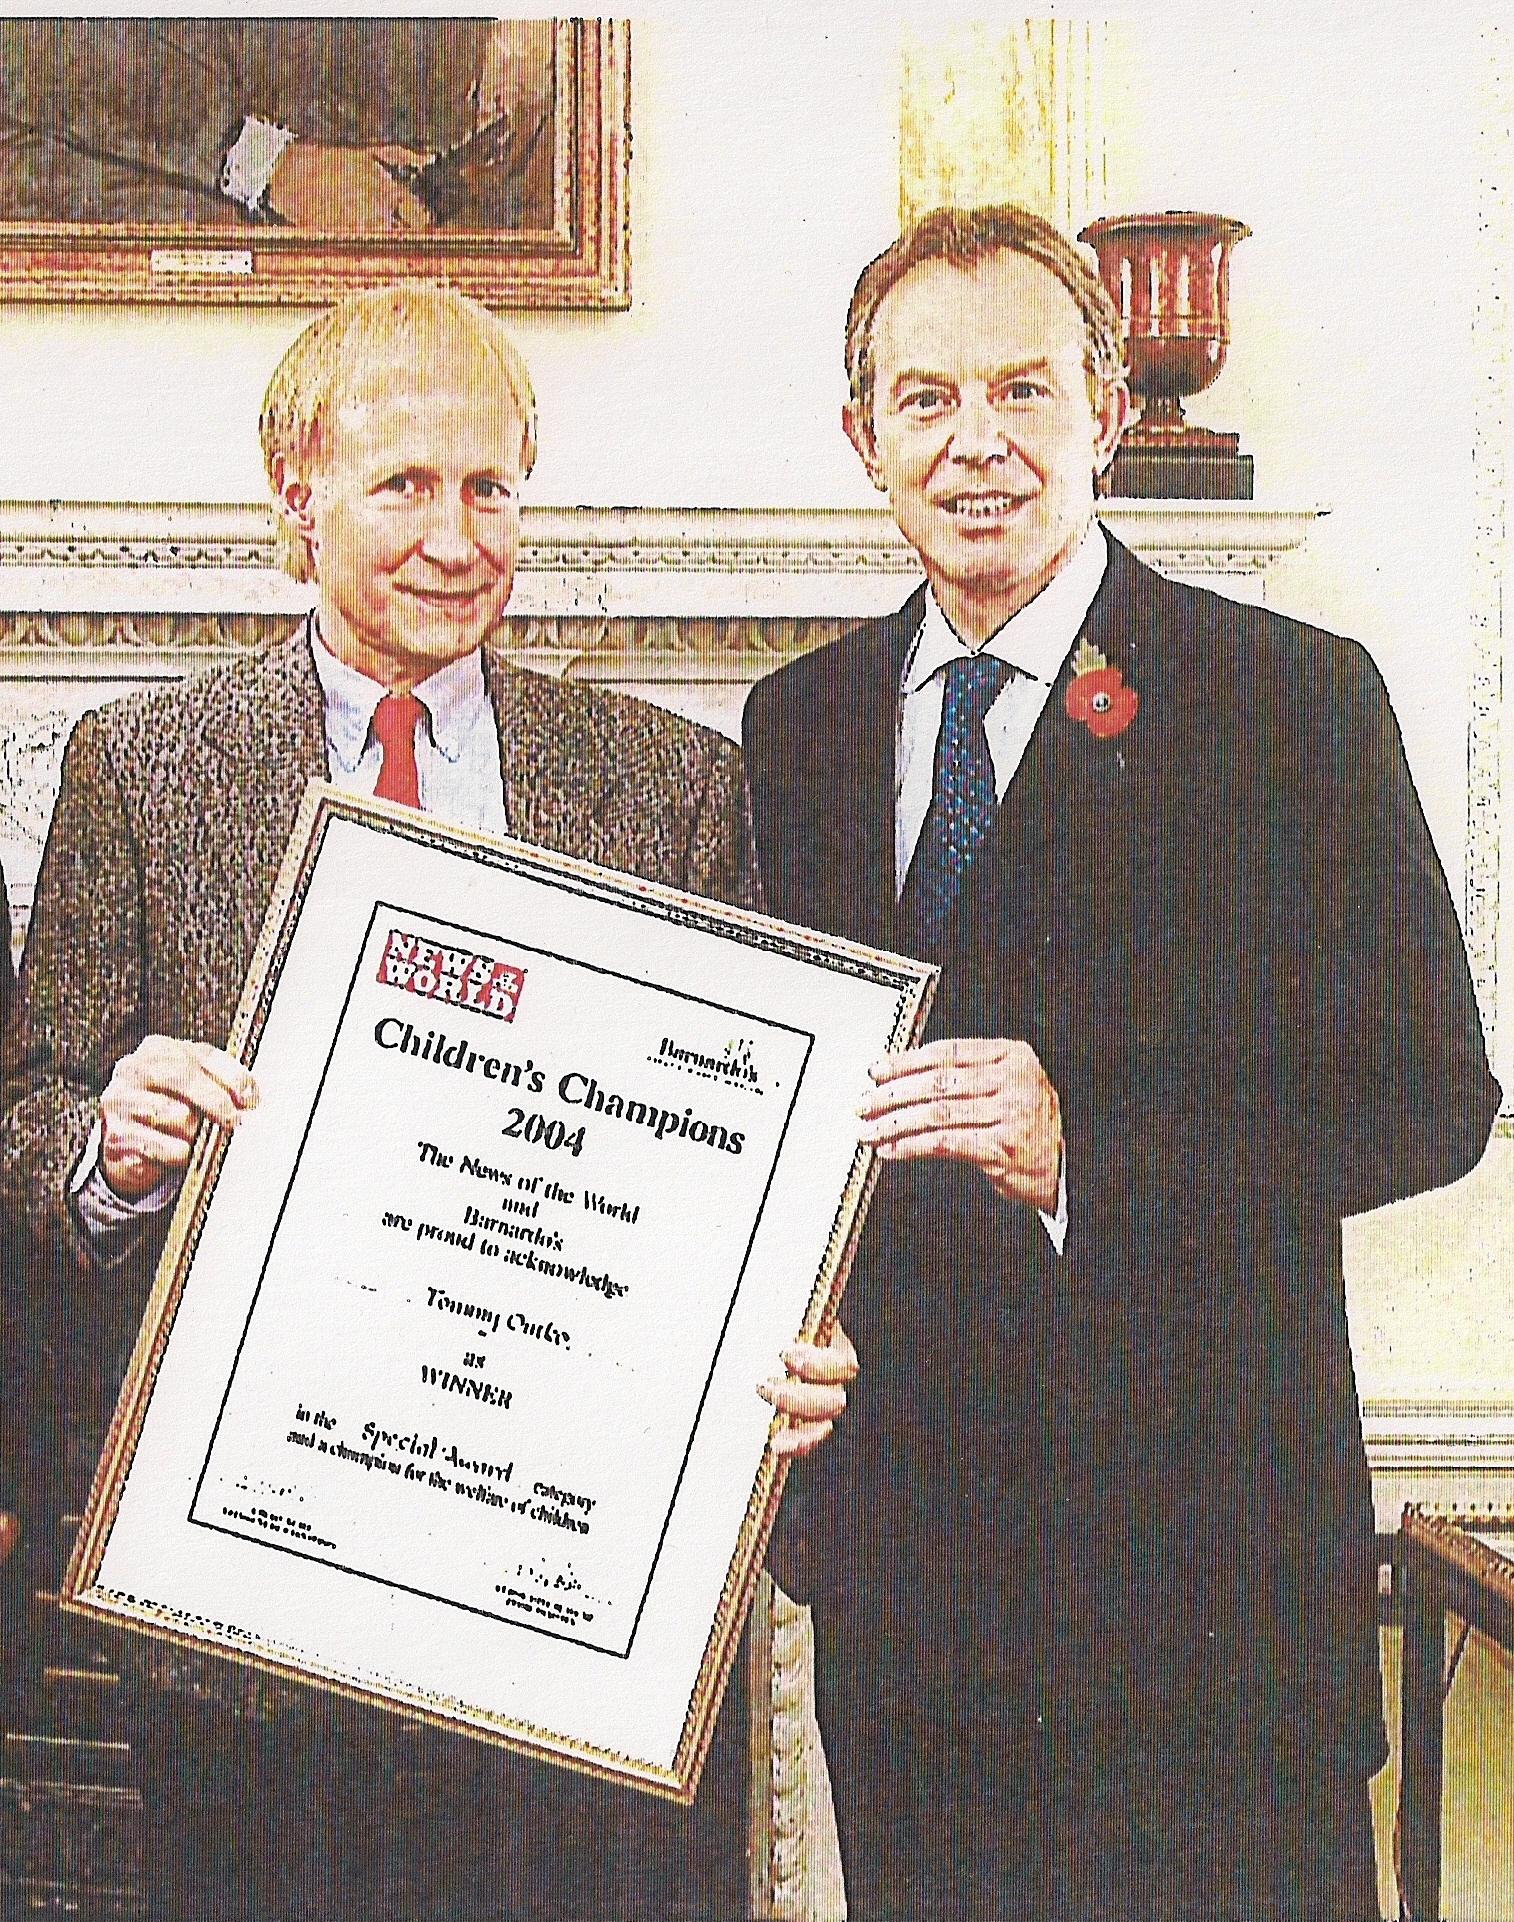 Prime Minister Tony Blair & Tommy Ontko